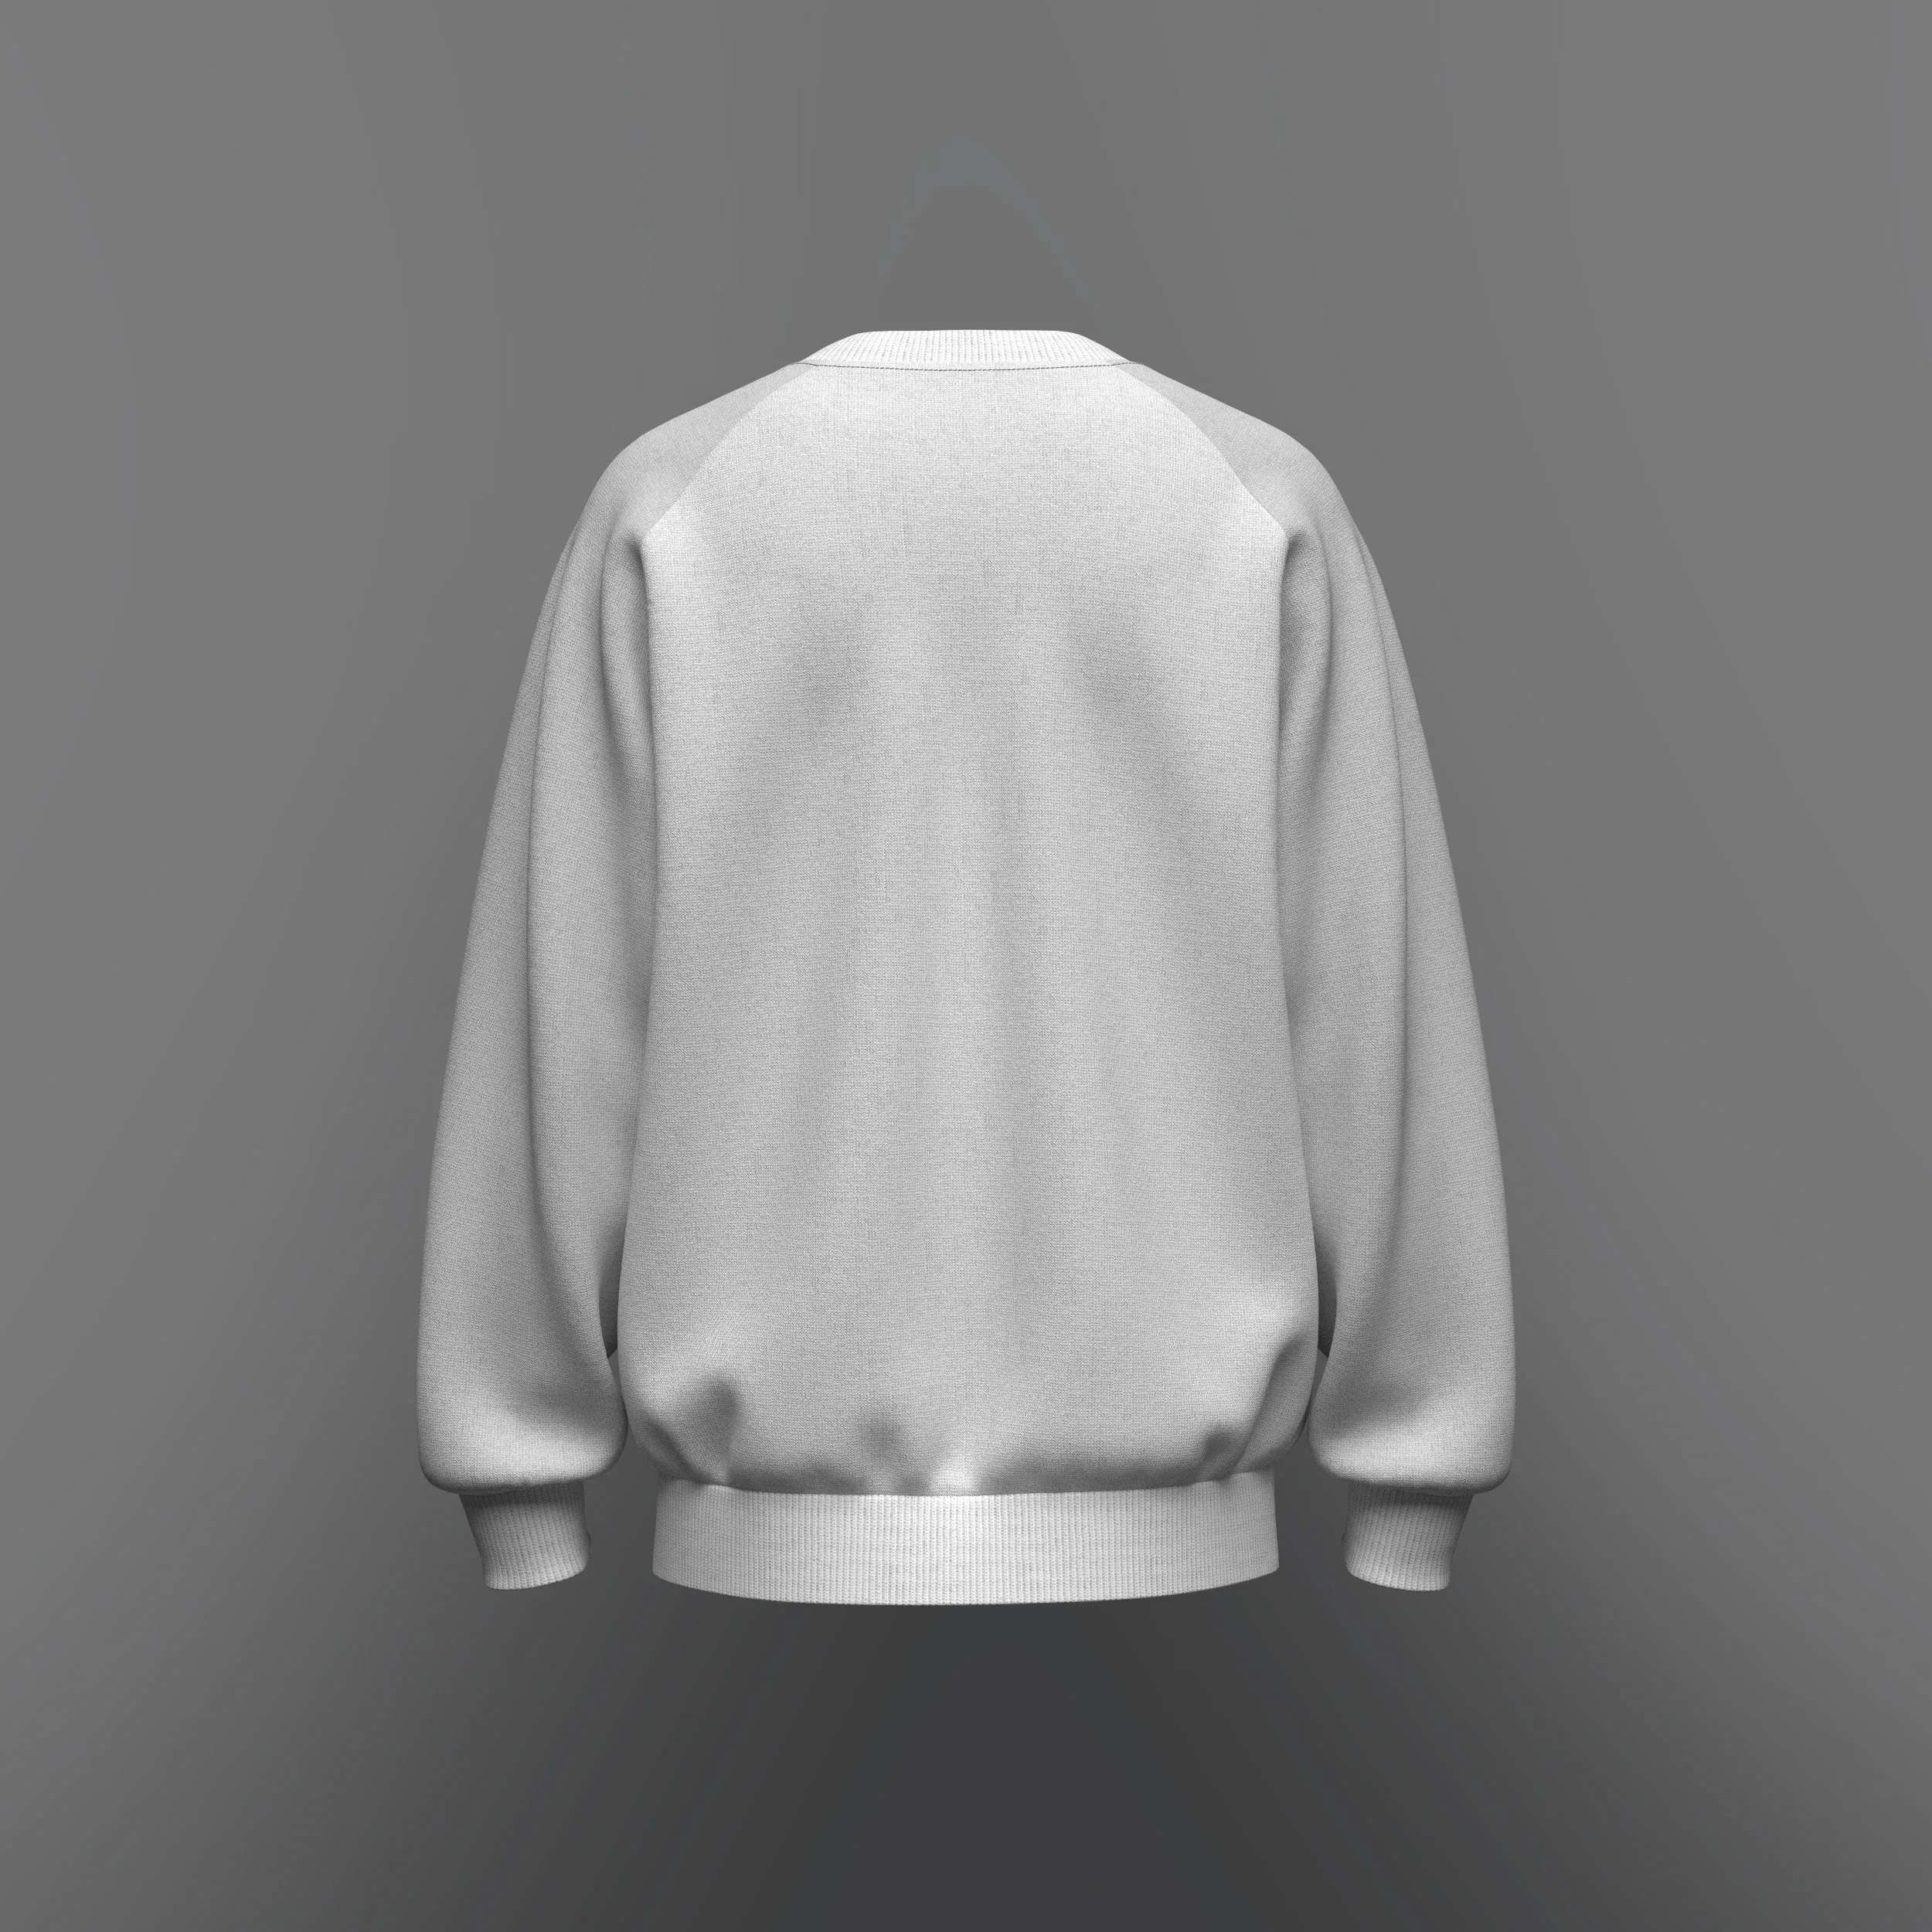 Men's Oversized Raglan Sweatshirt_Marvelous Designer, Clo3d, Fbx, obj